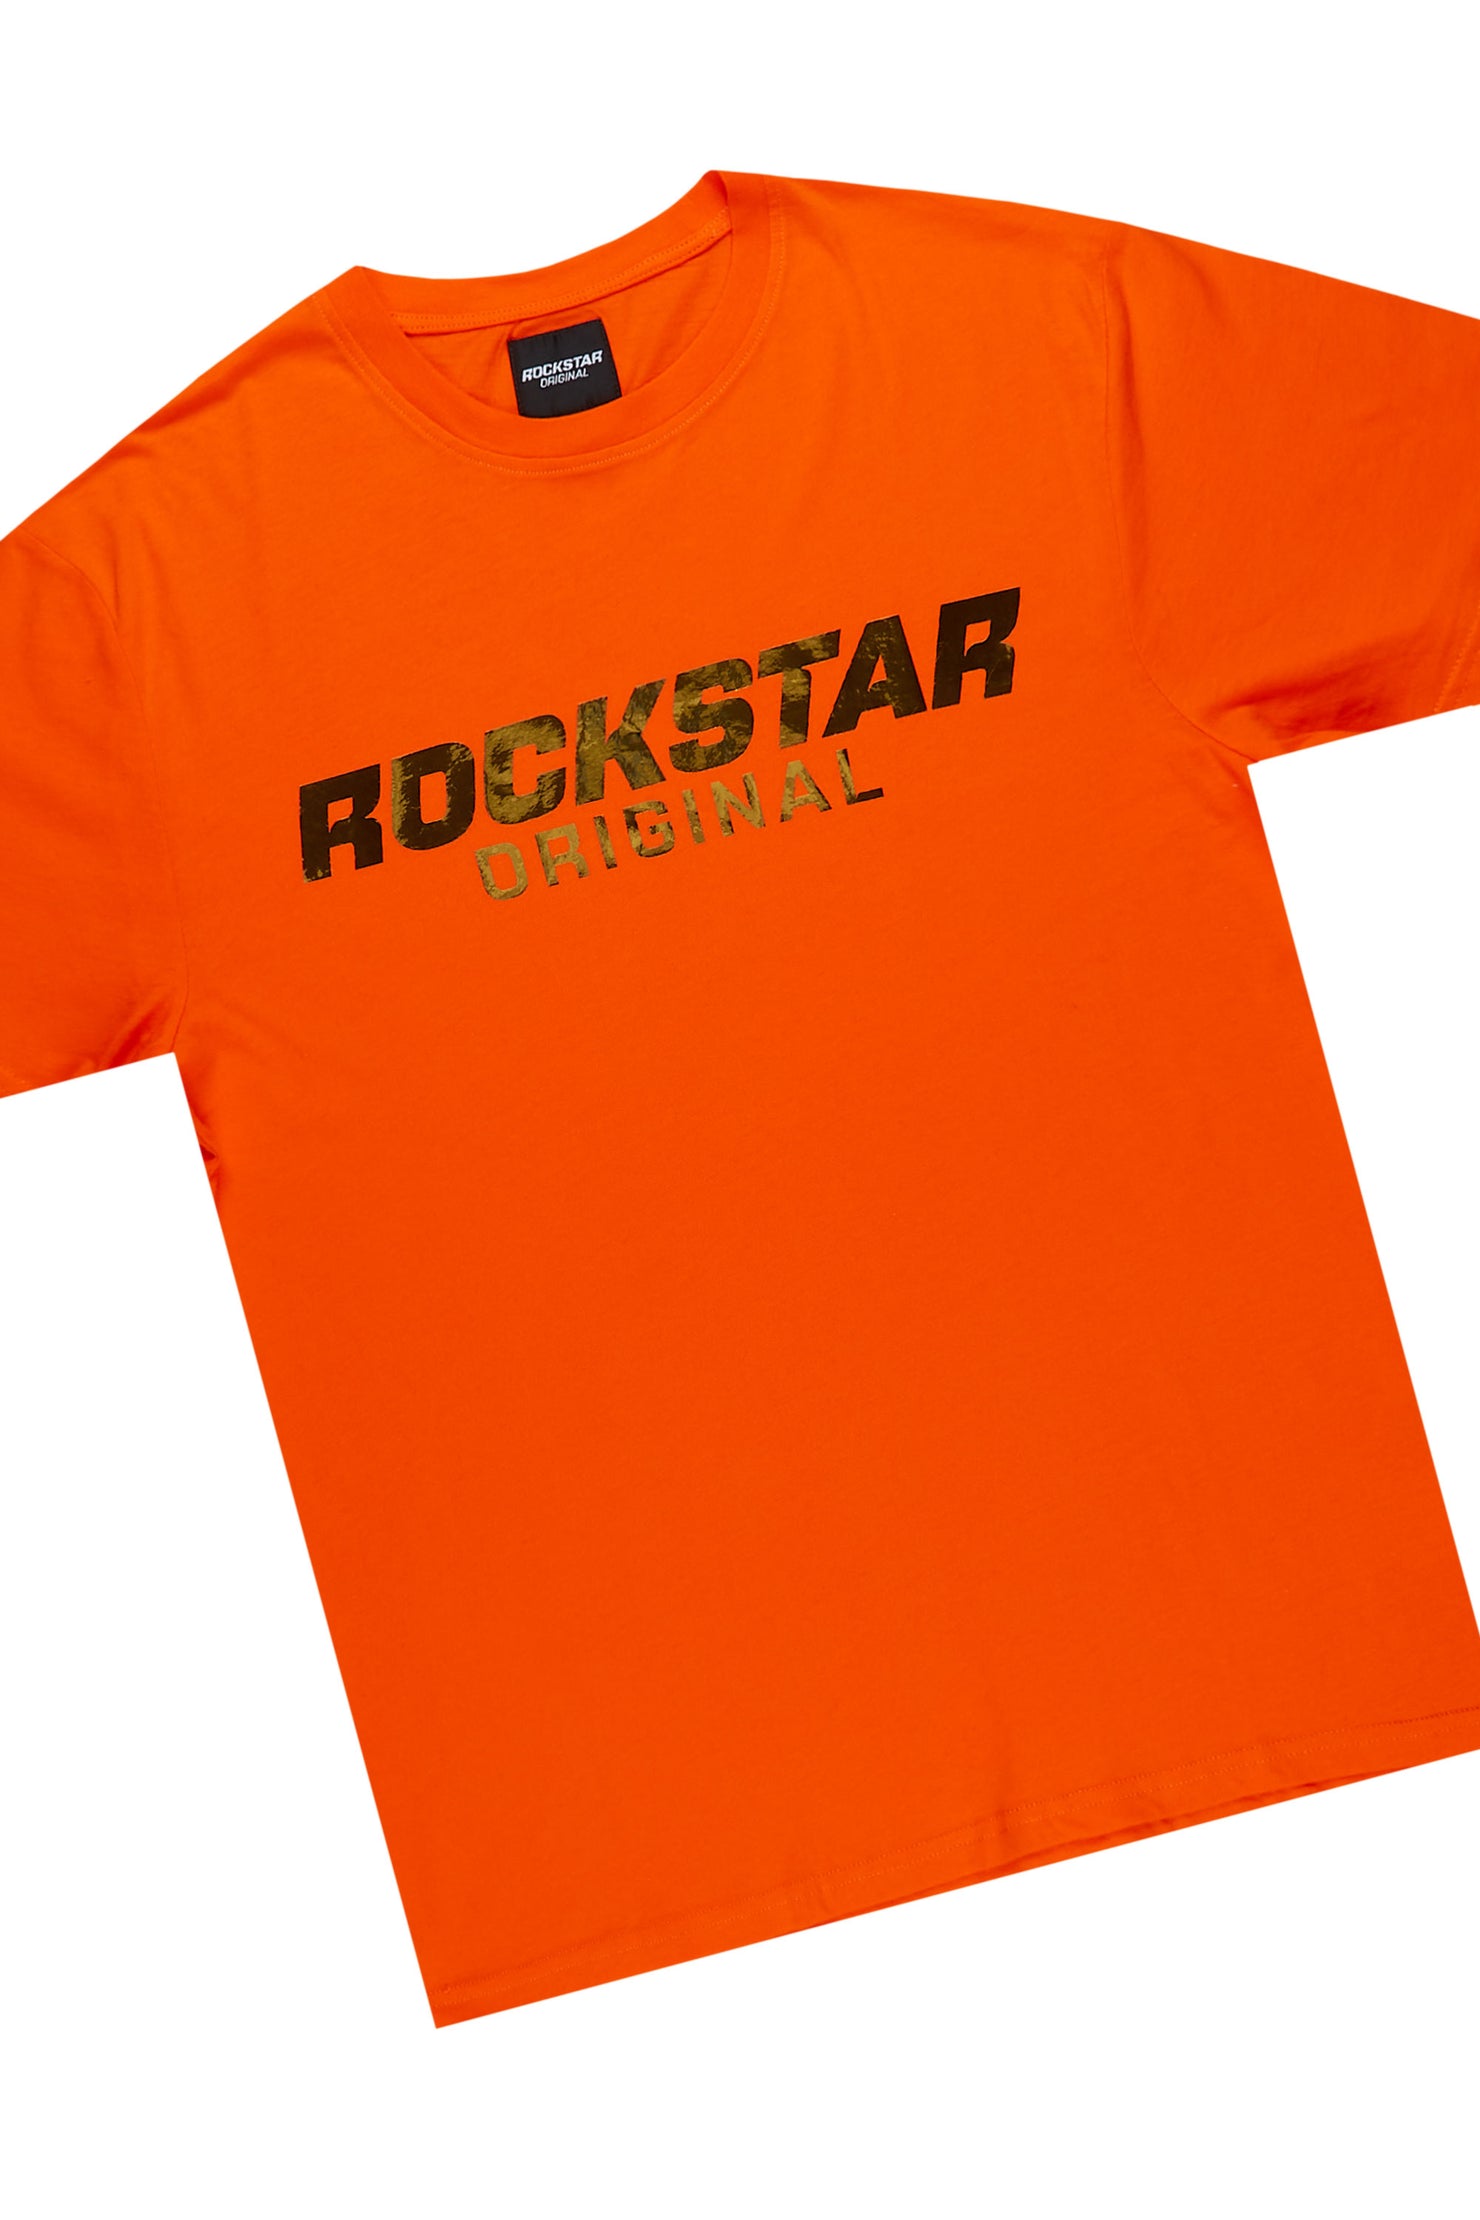 Ochre Orange Graphic T-Shirt Short Set